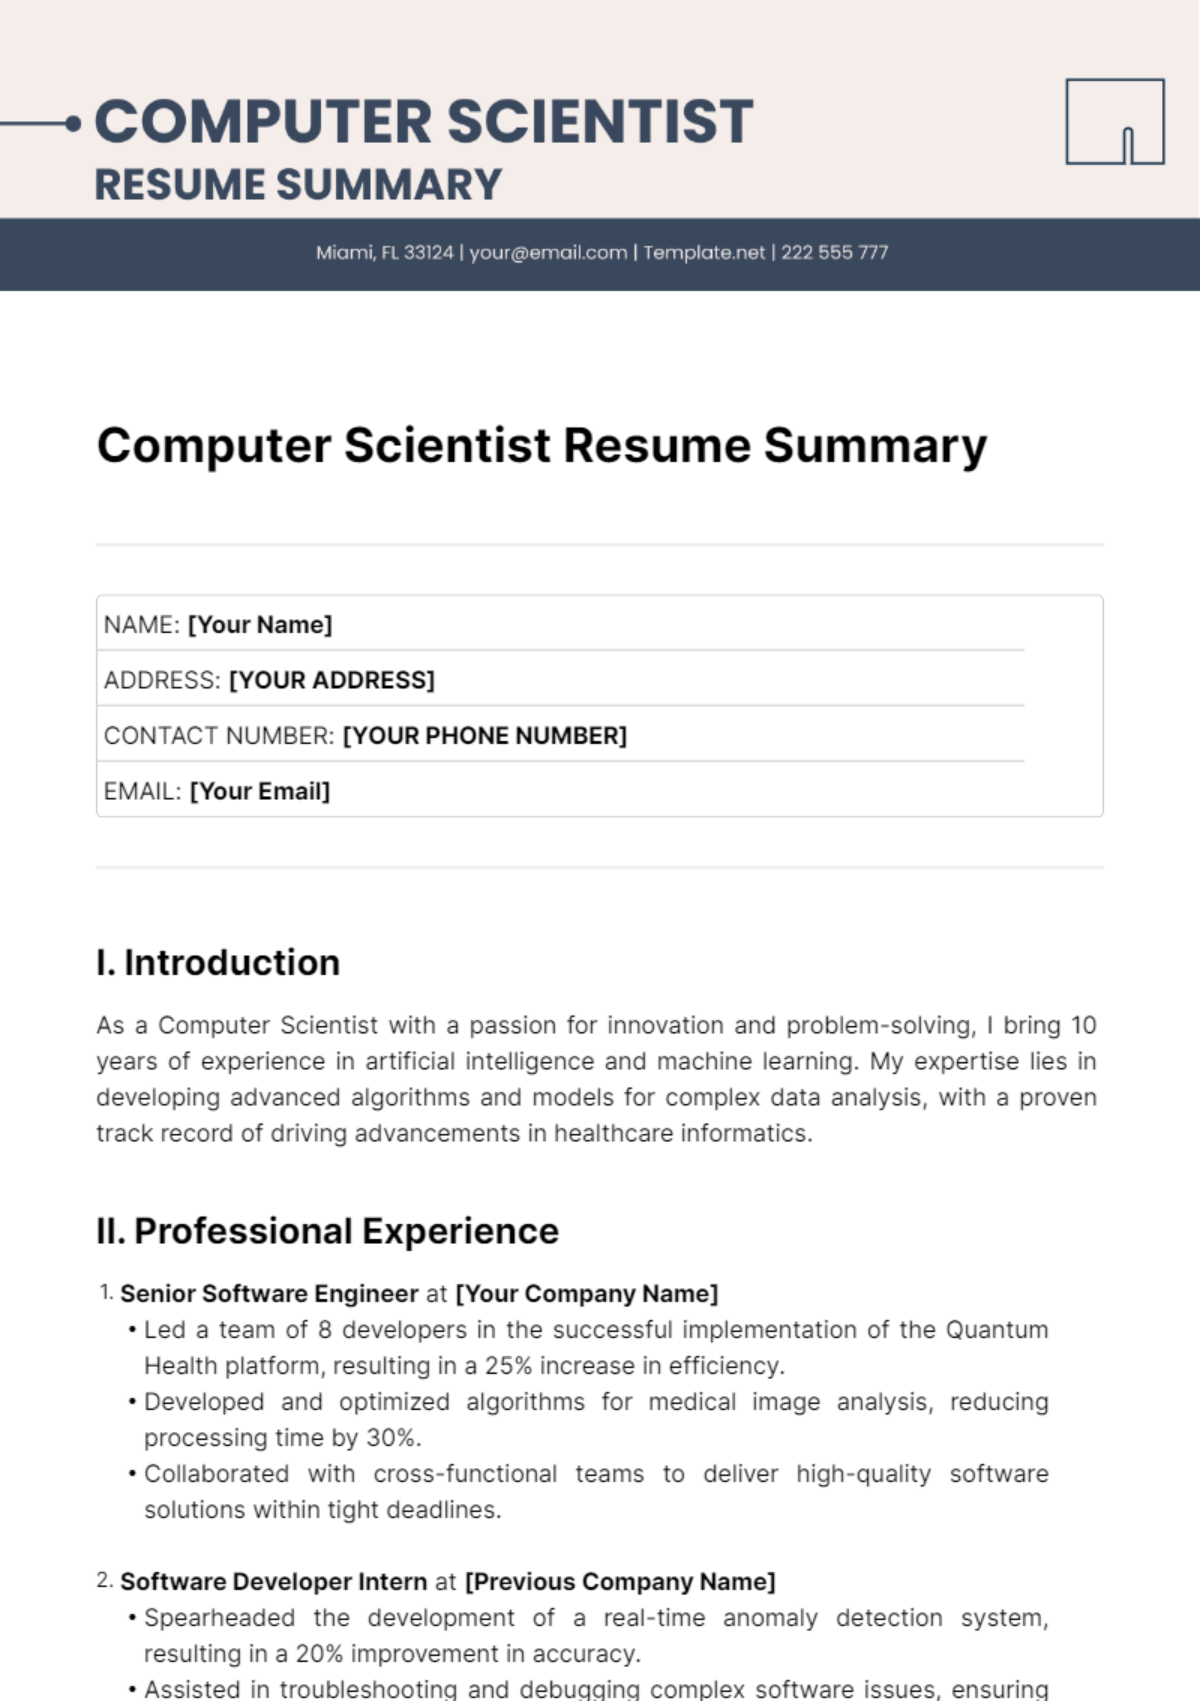 Computer Scientist Resume Summary Template